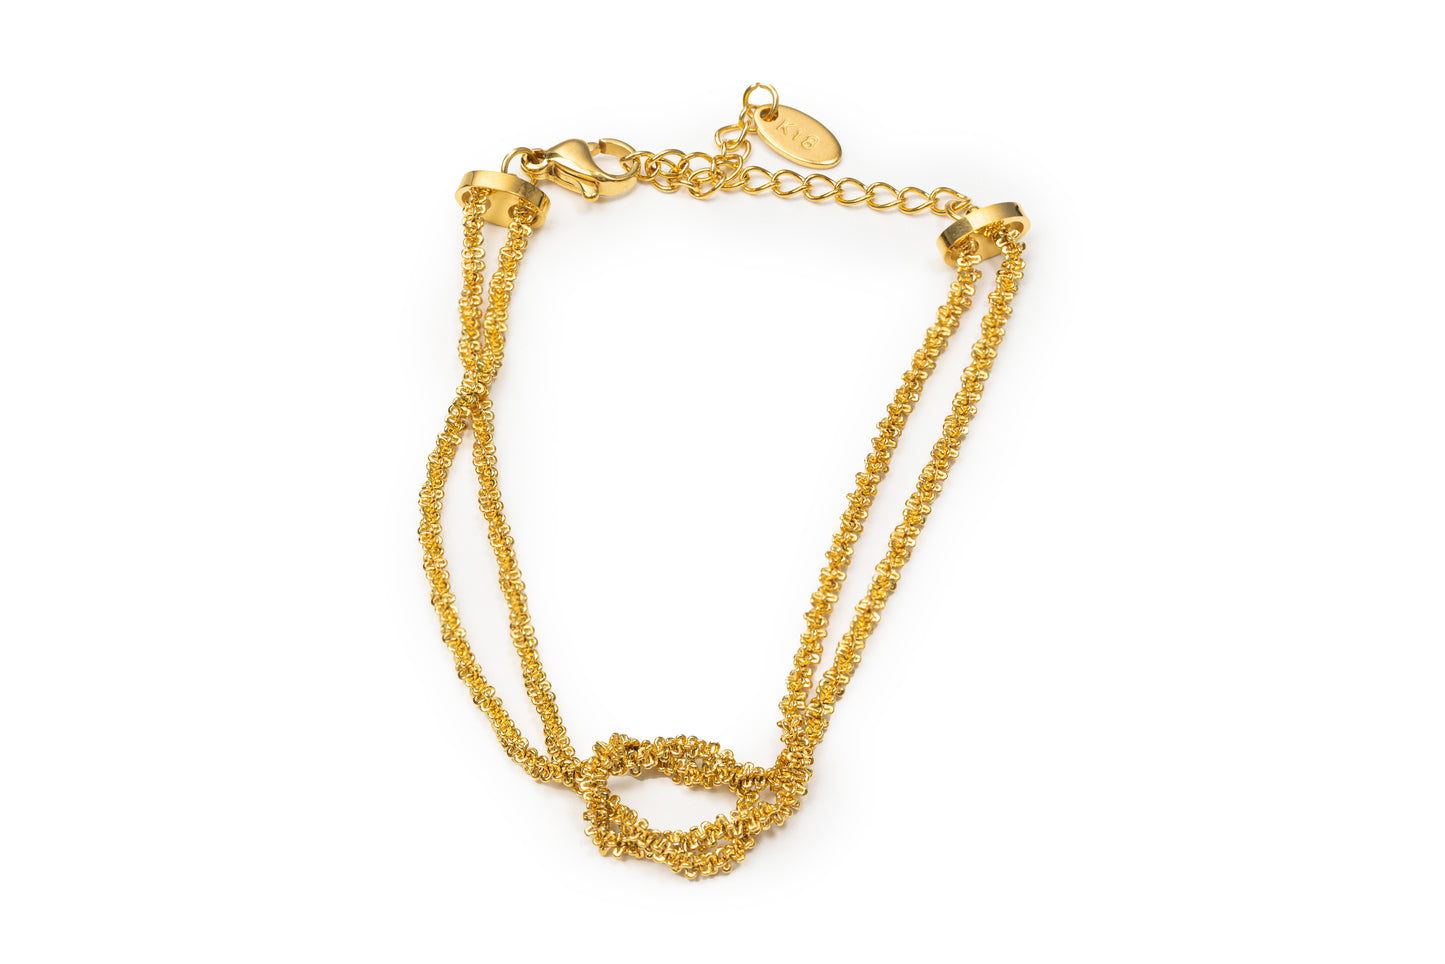 Planderful Golden Twisted Knot Bracelet - Golden Bracelet for Women